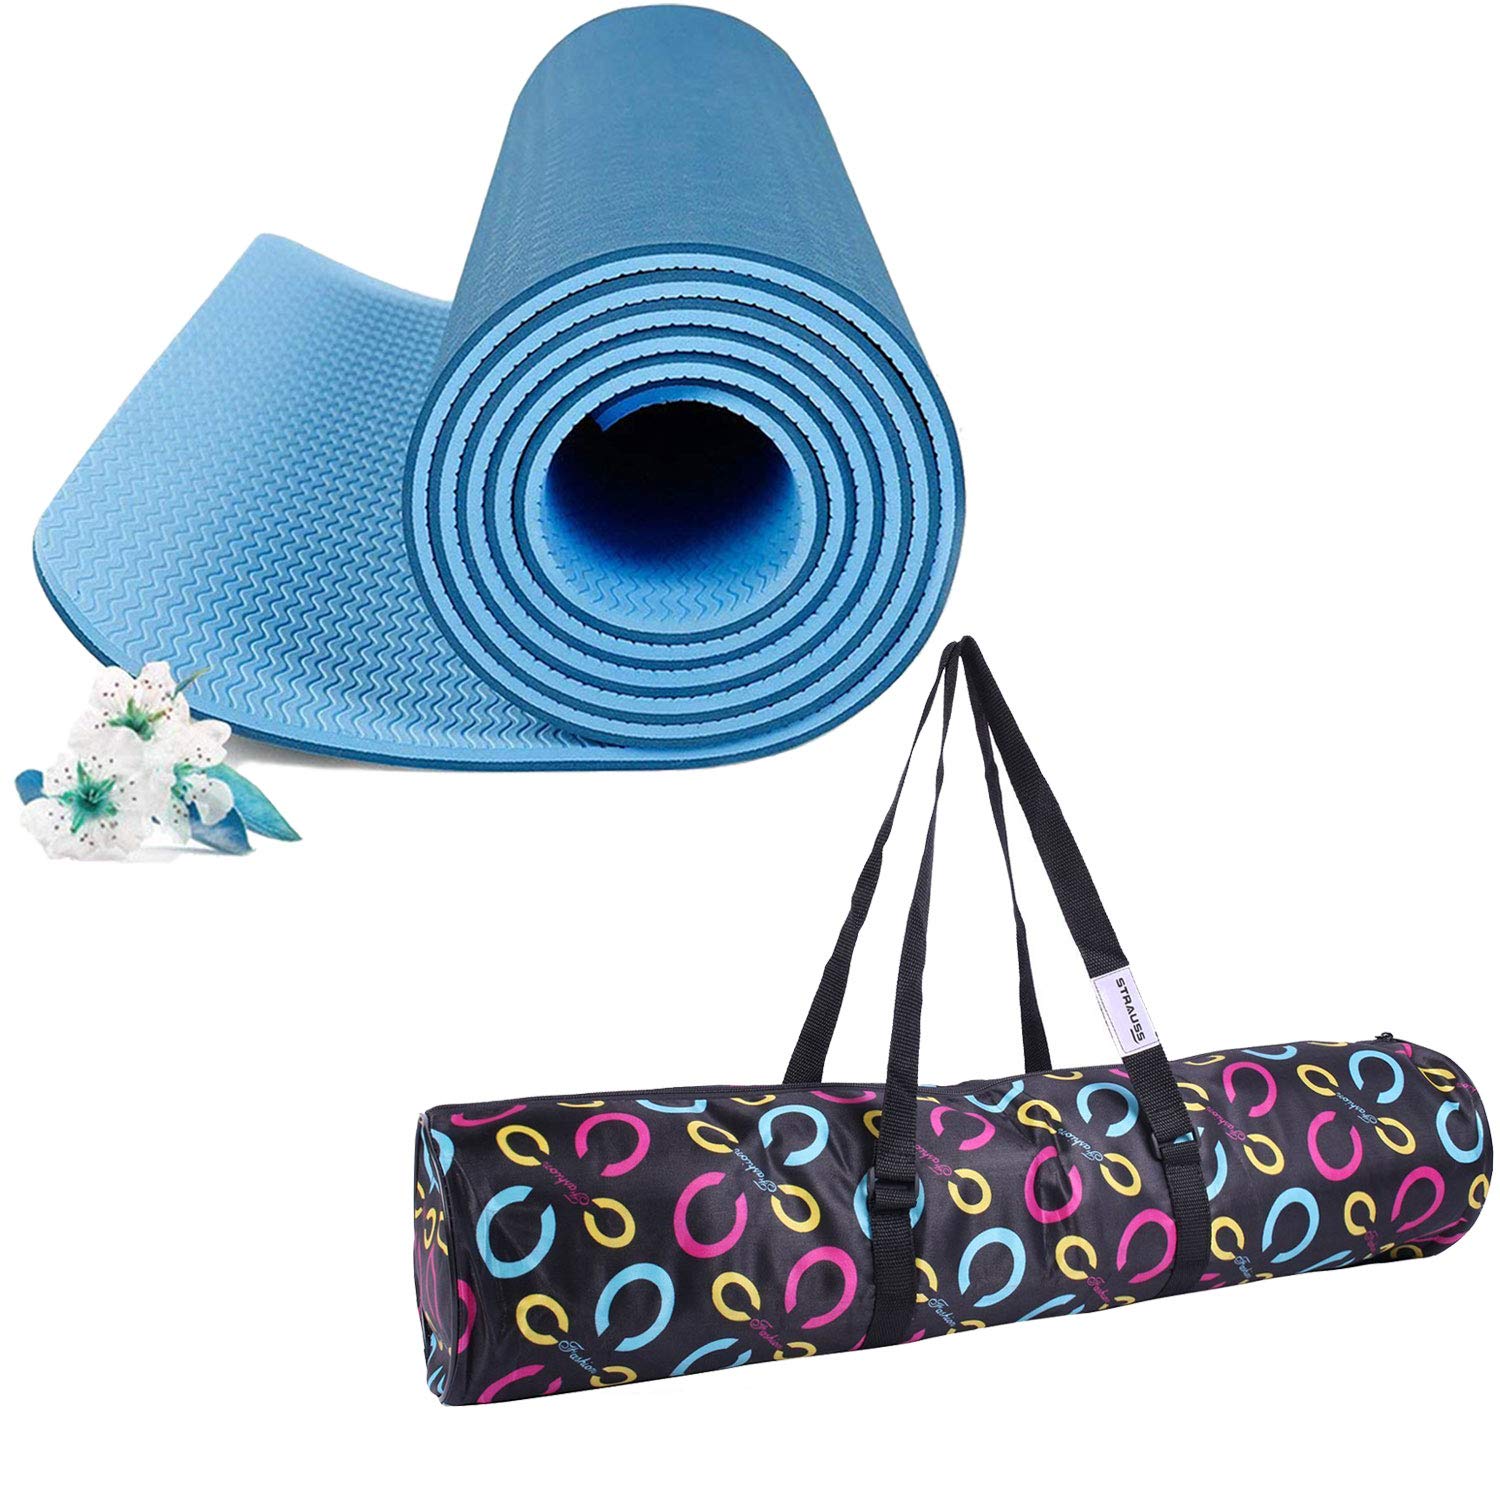 Strauss Eco Friendly Dual Layer TPE Premium Yoga Mat 6 mm (Blue), Yoga –  StraussSport